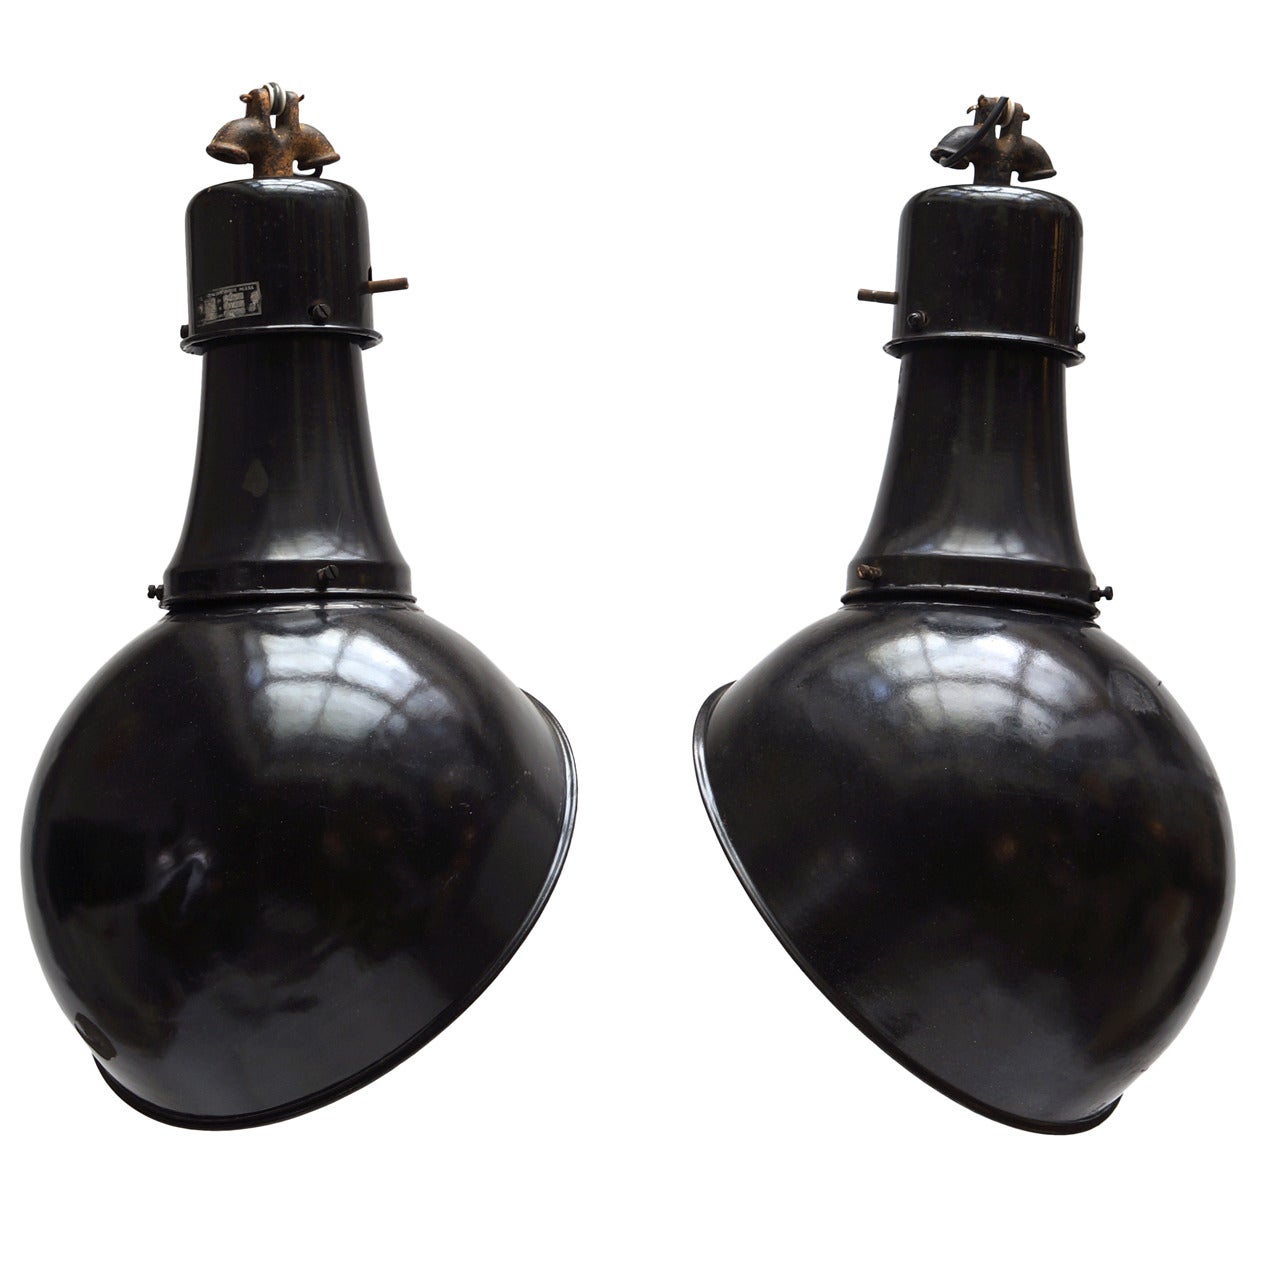 Pair of Black Industrial Hanging Lamps